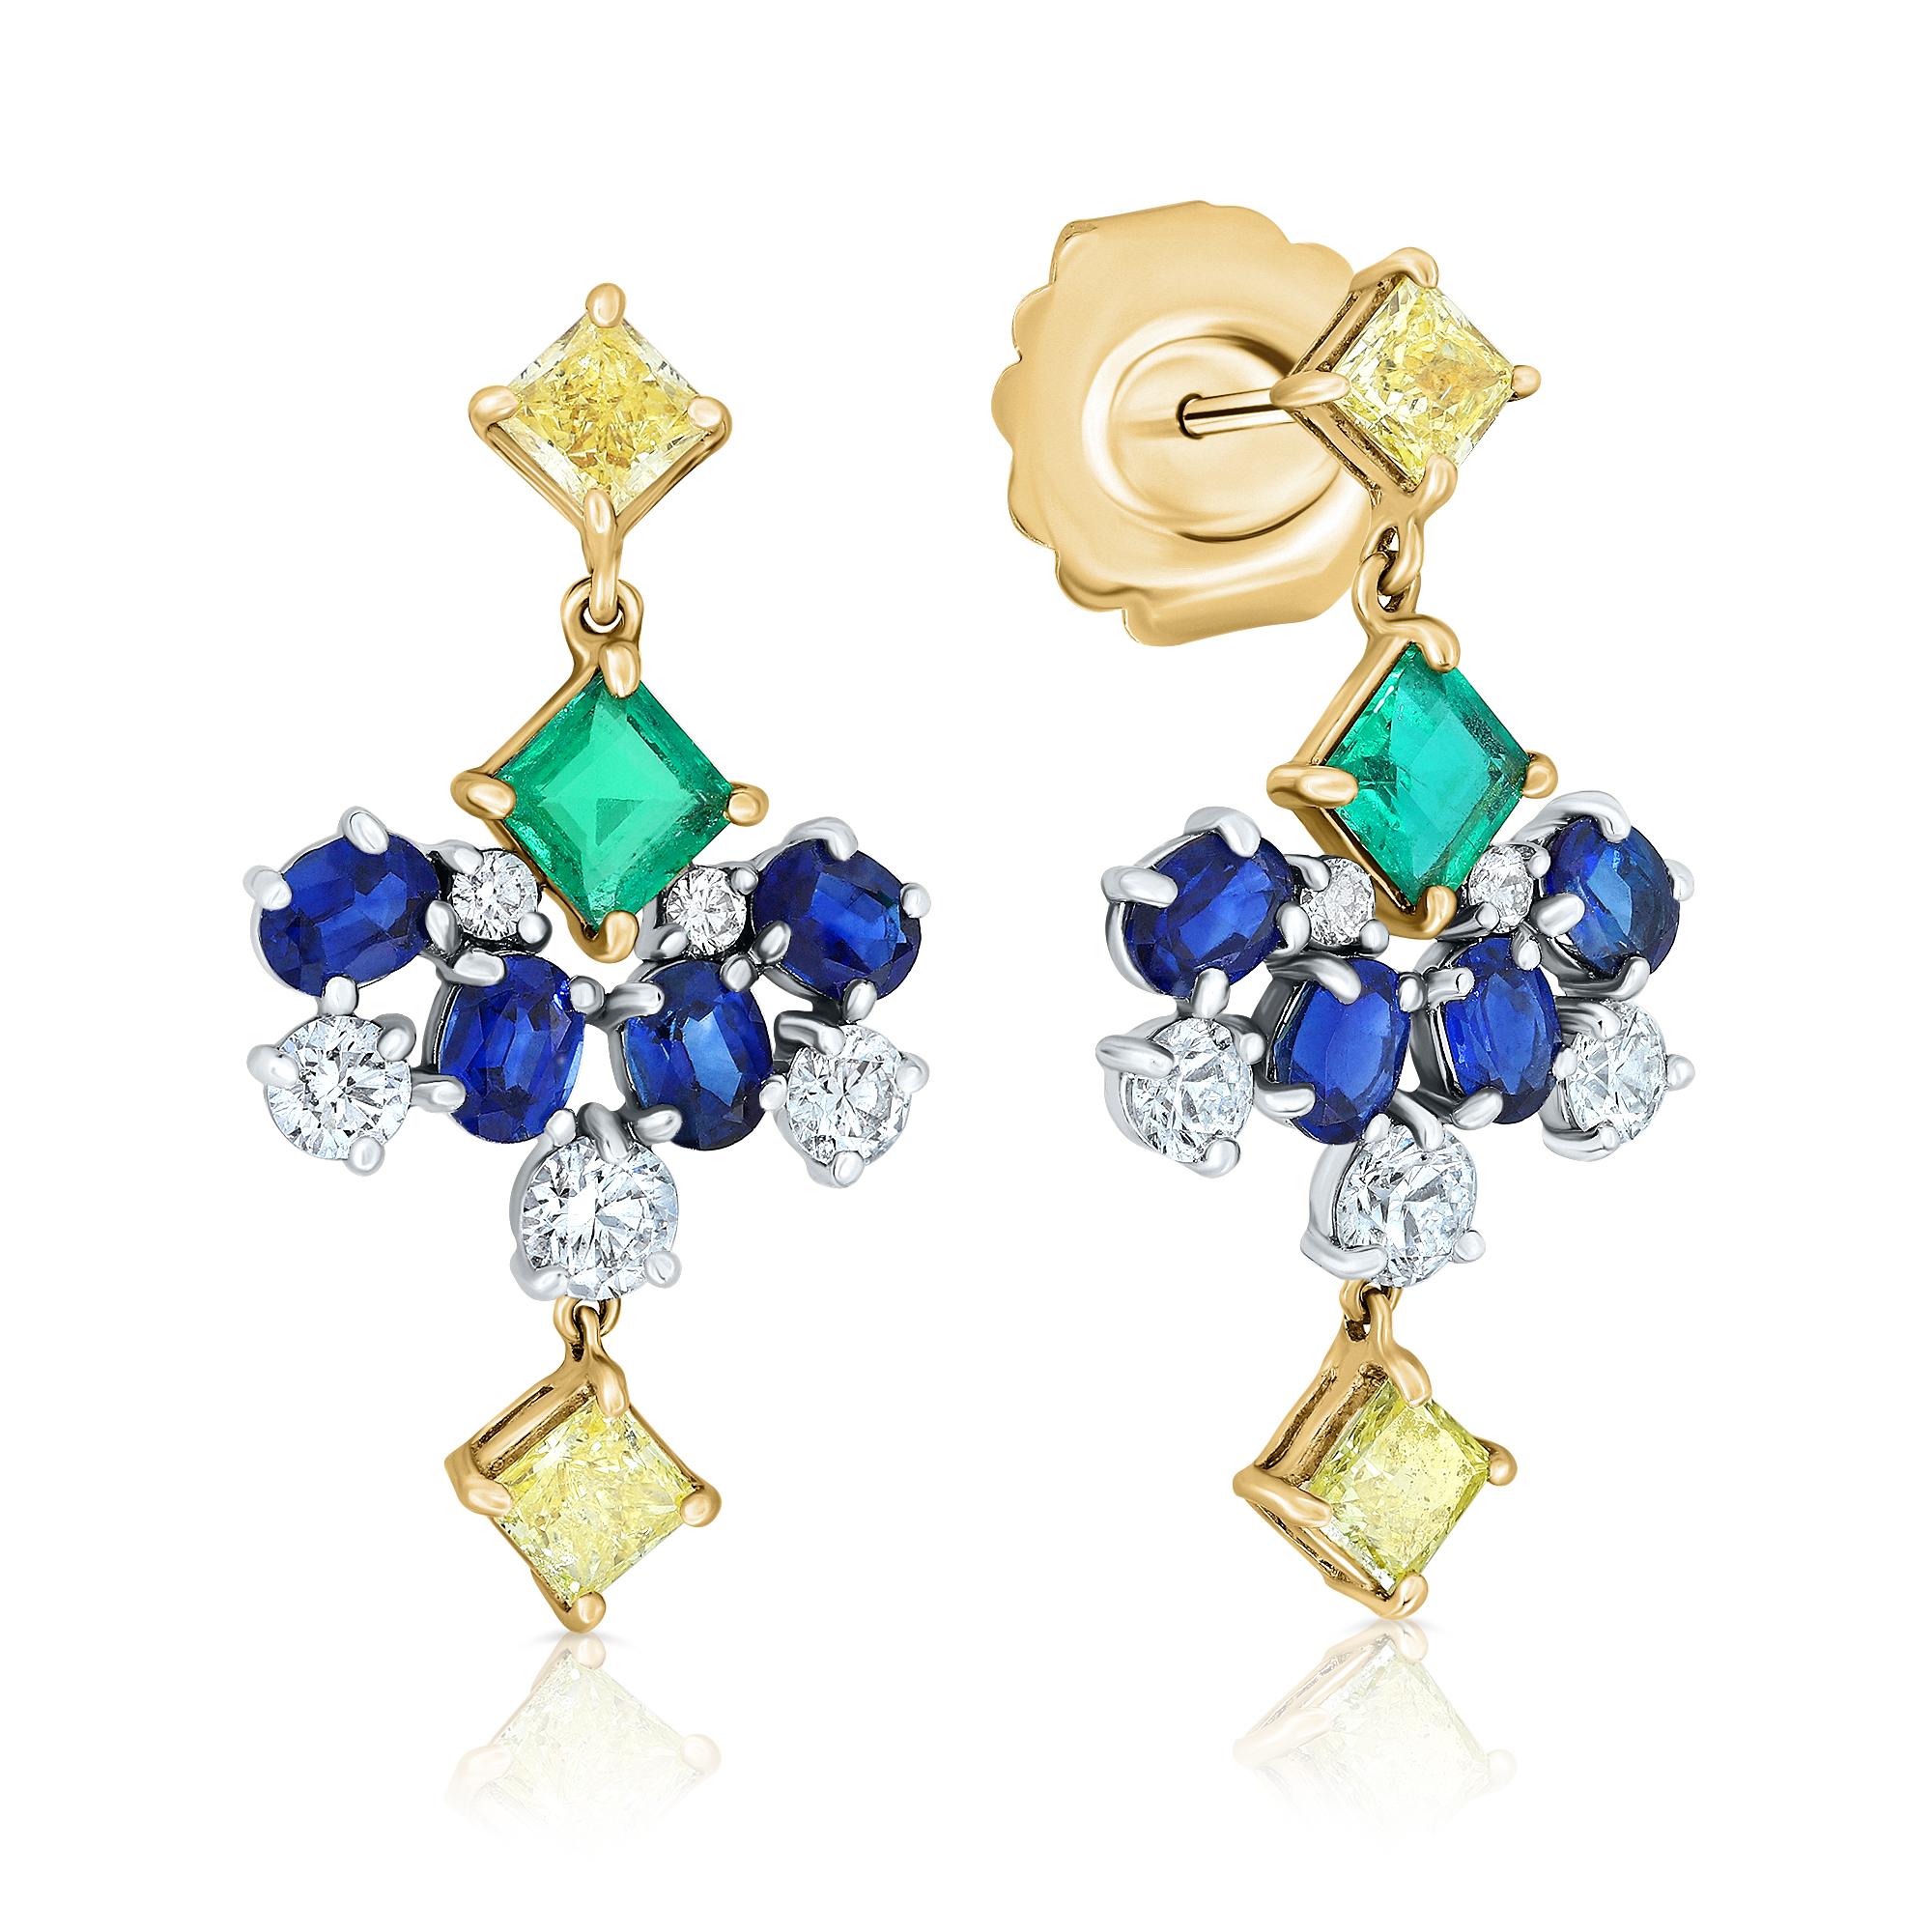 Princess Cut 4.5 Carat Yellow Diamond, Sapphire & Emerald Dangle Earrings Platinum 18k Gold. For Sale